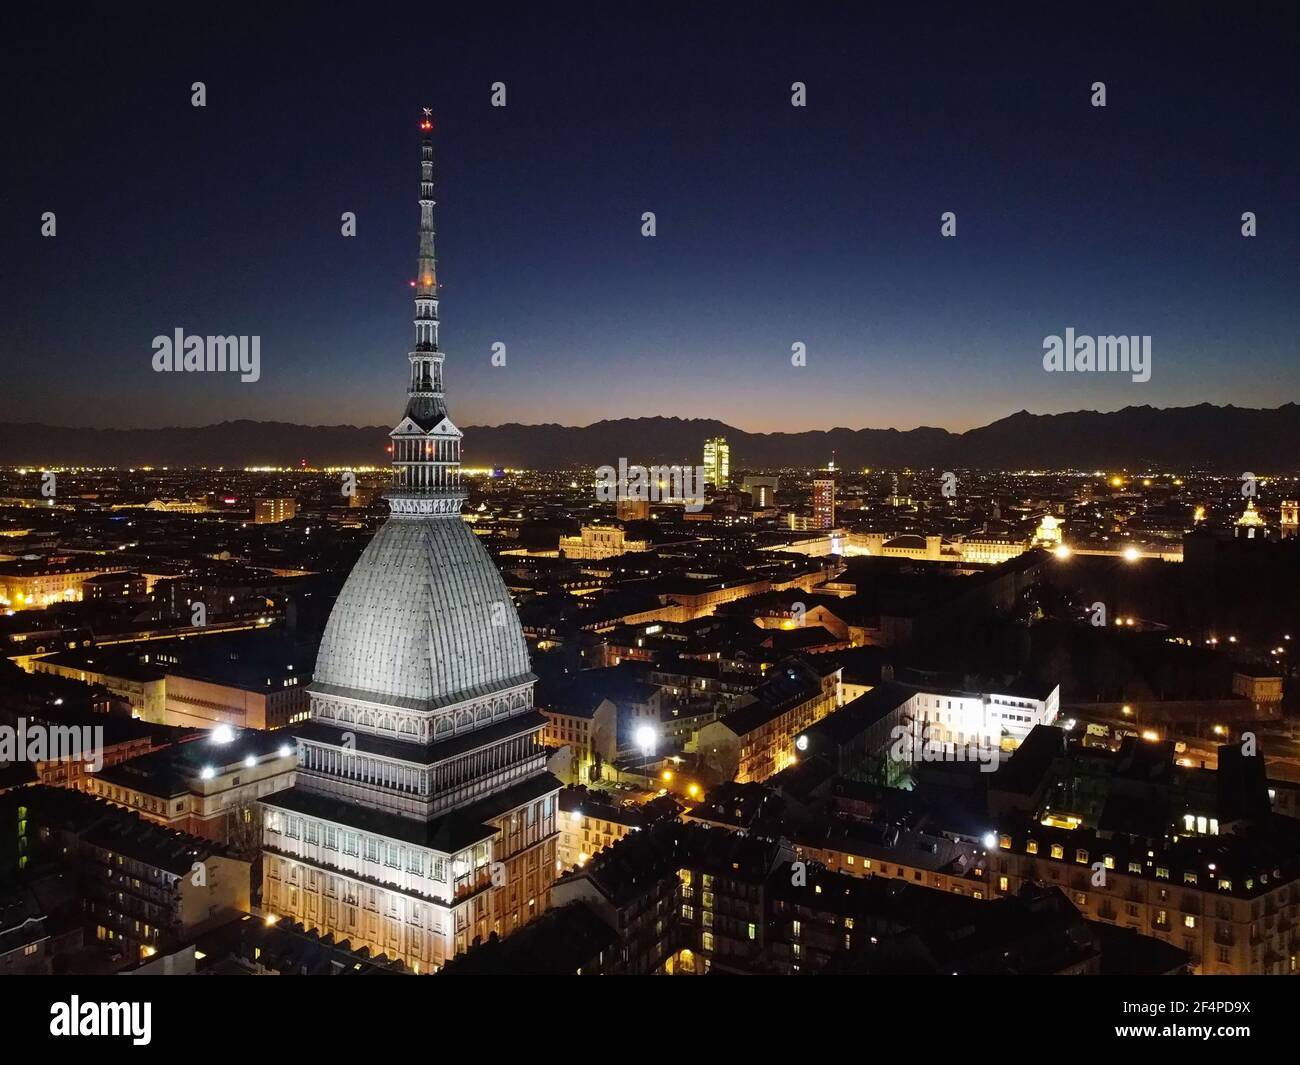 Night view of the illuminated Mole Antonelliana. Turin, Italy - March 2021 Stock Photo